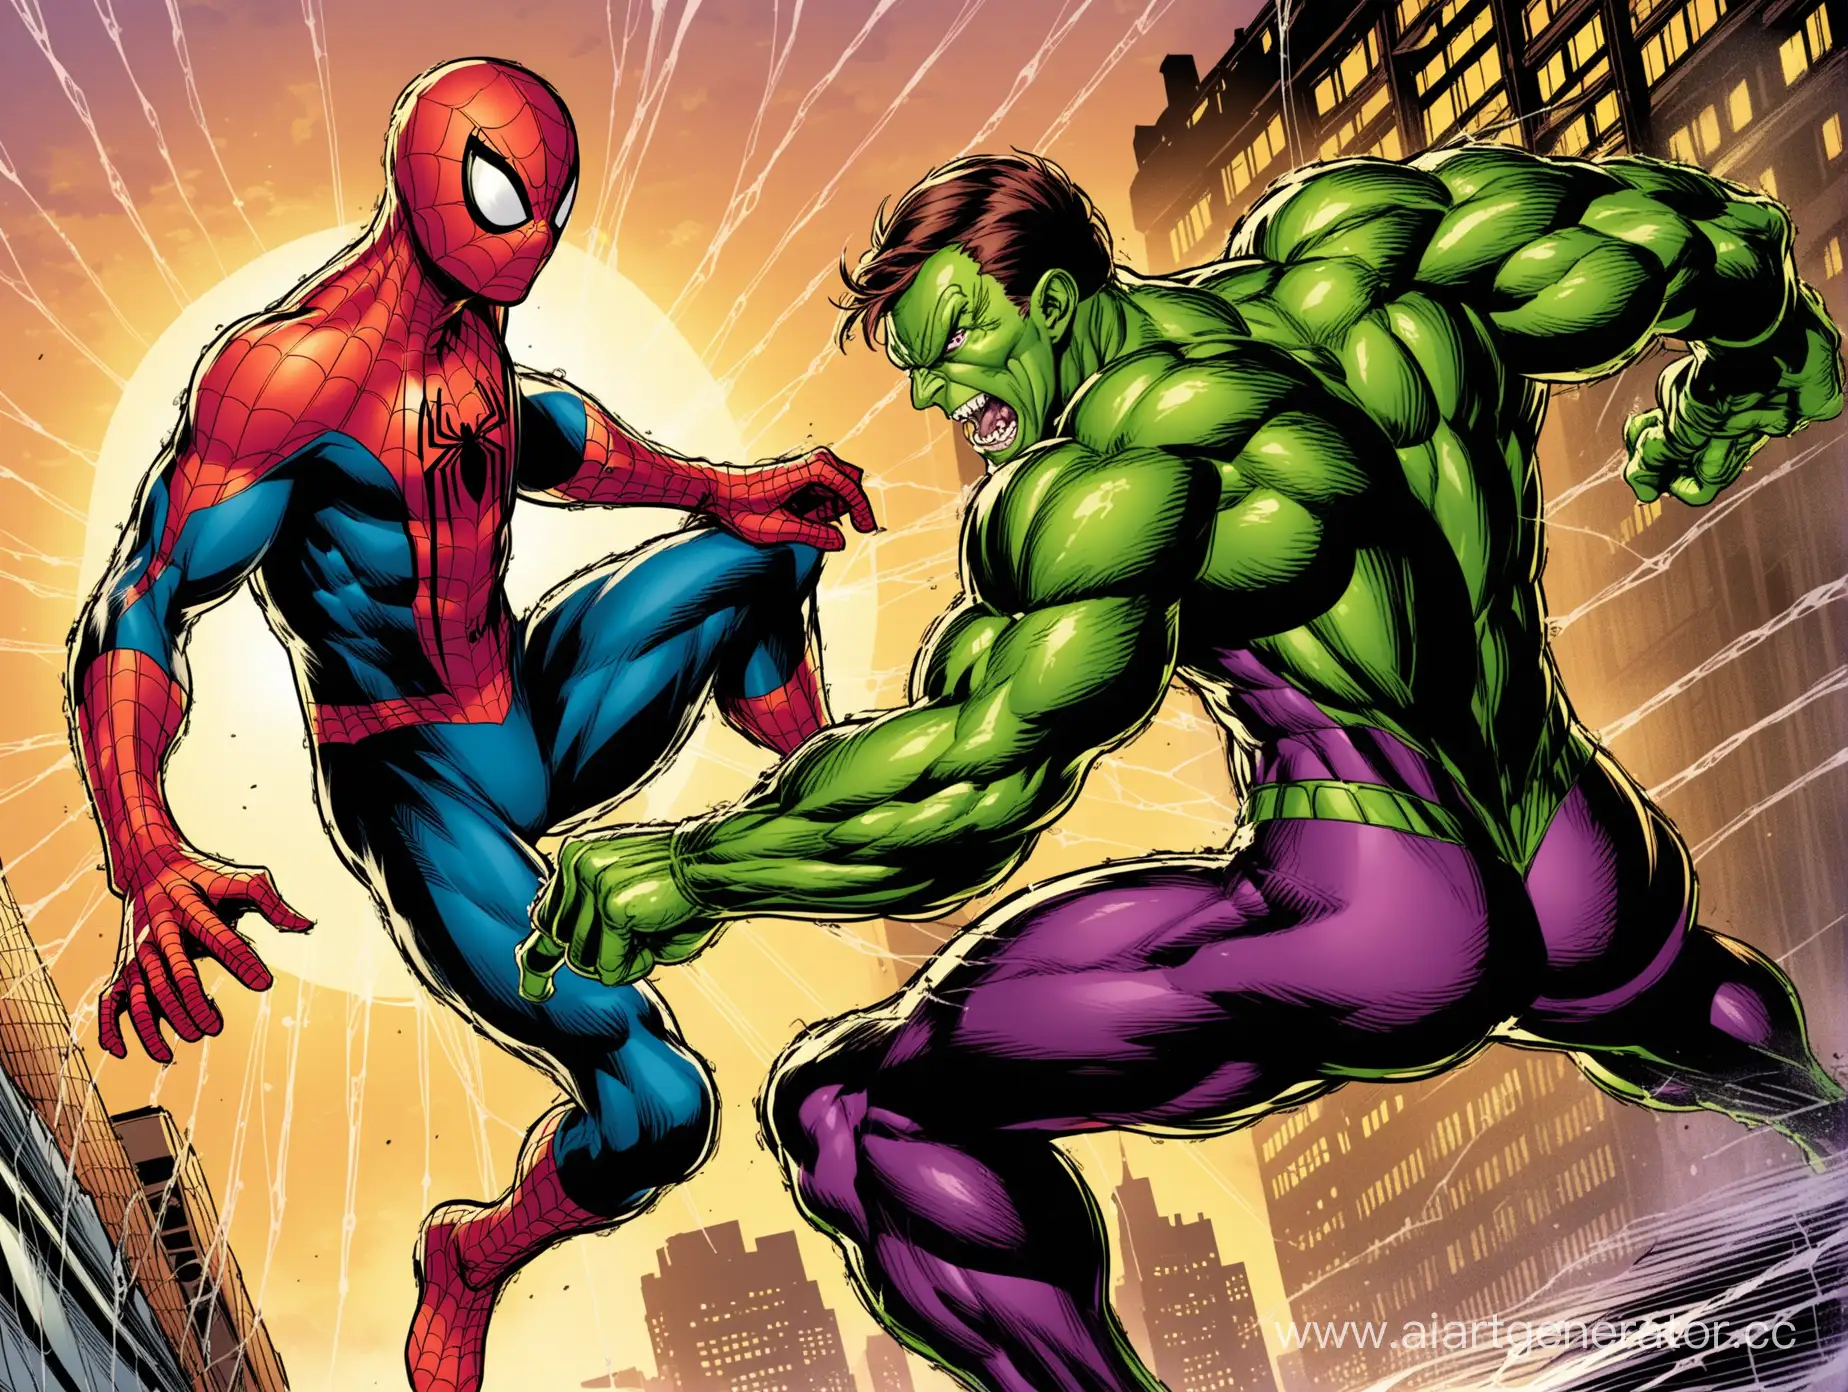 Epic-Battle-SpiderMan-vs-Green-Goblin-in-Costume-Clash